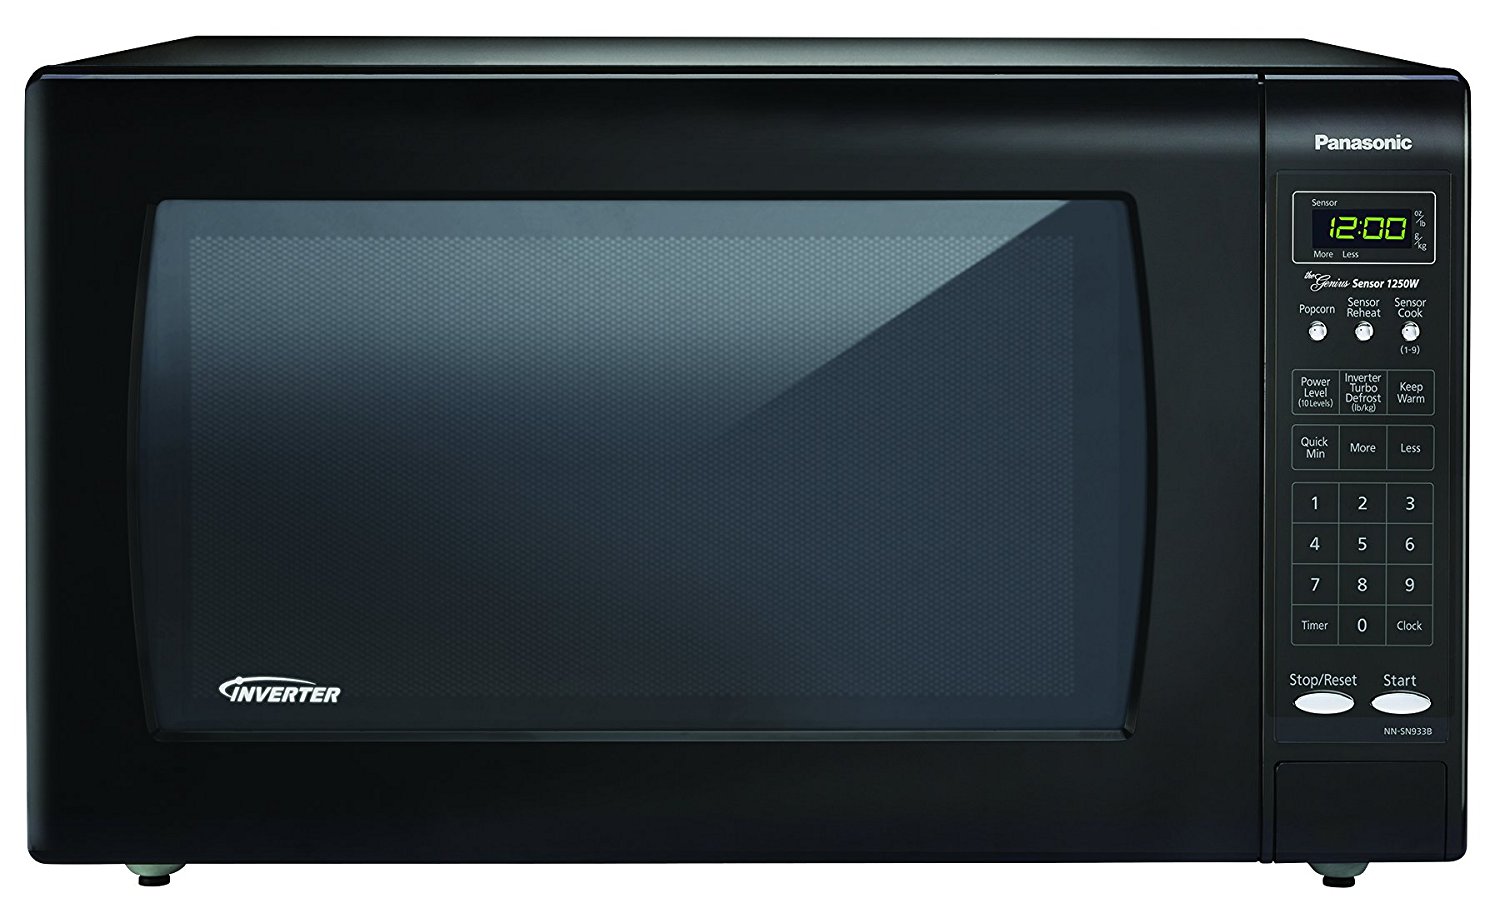 Panasonic NN-SN933B Black 1250W 2.2 Cu. Ft. Countertop Microwave Oven with Inverter Technology